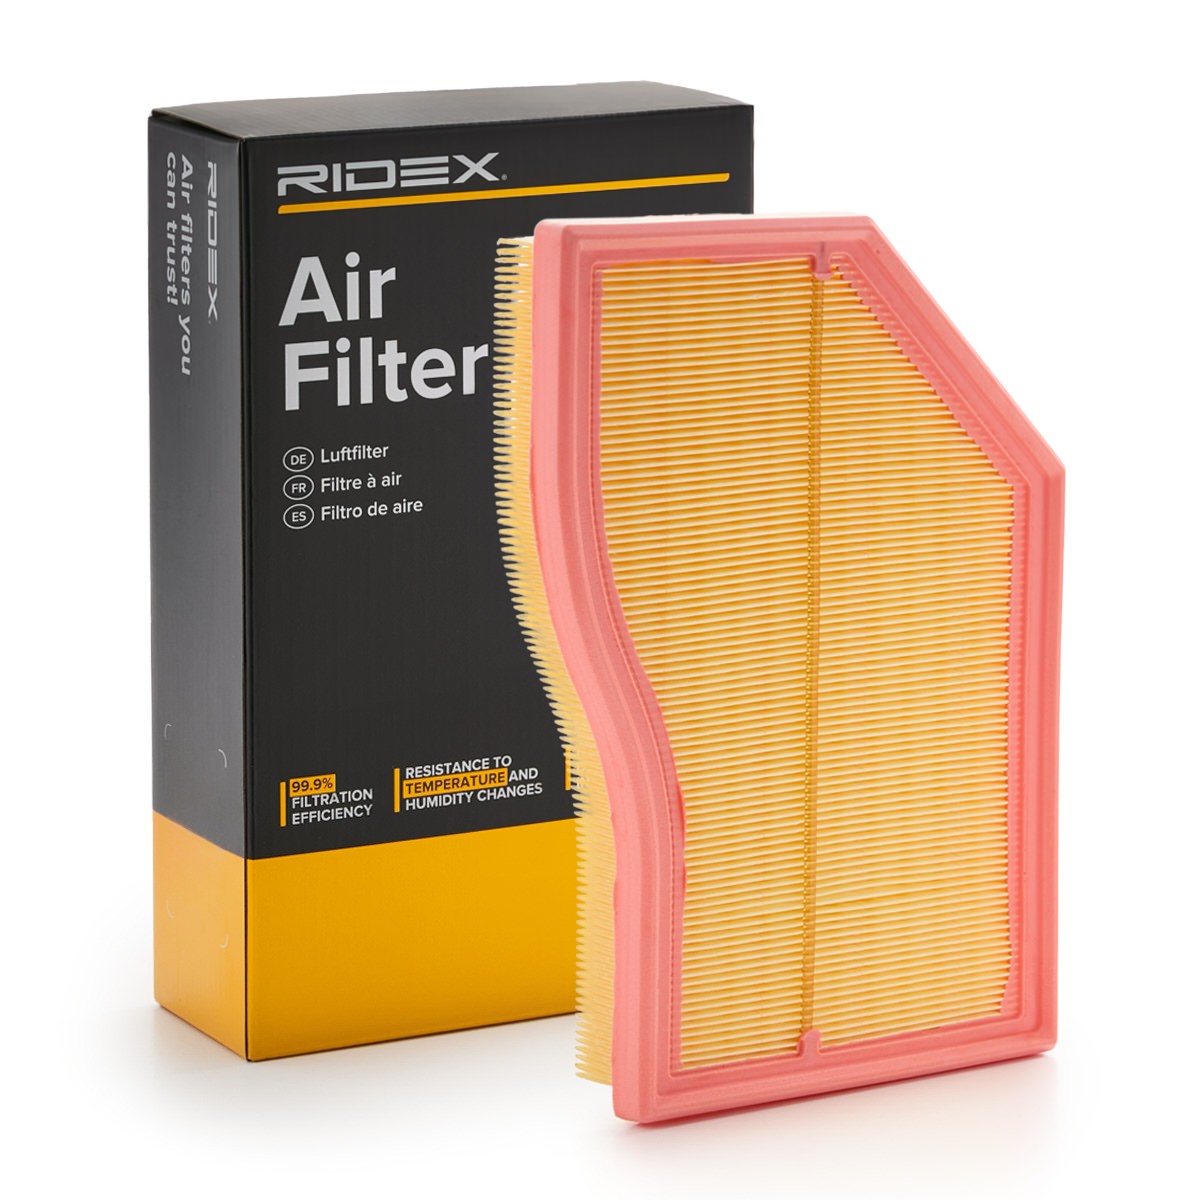 RIDEX 8A1057 Air filter 47mm, 219mm, 295mm, Square, Filter Insert, Air Recirculation Filter